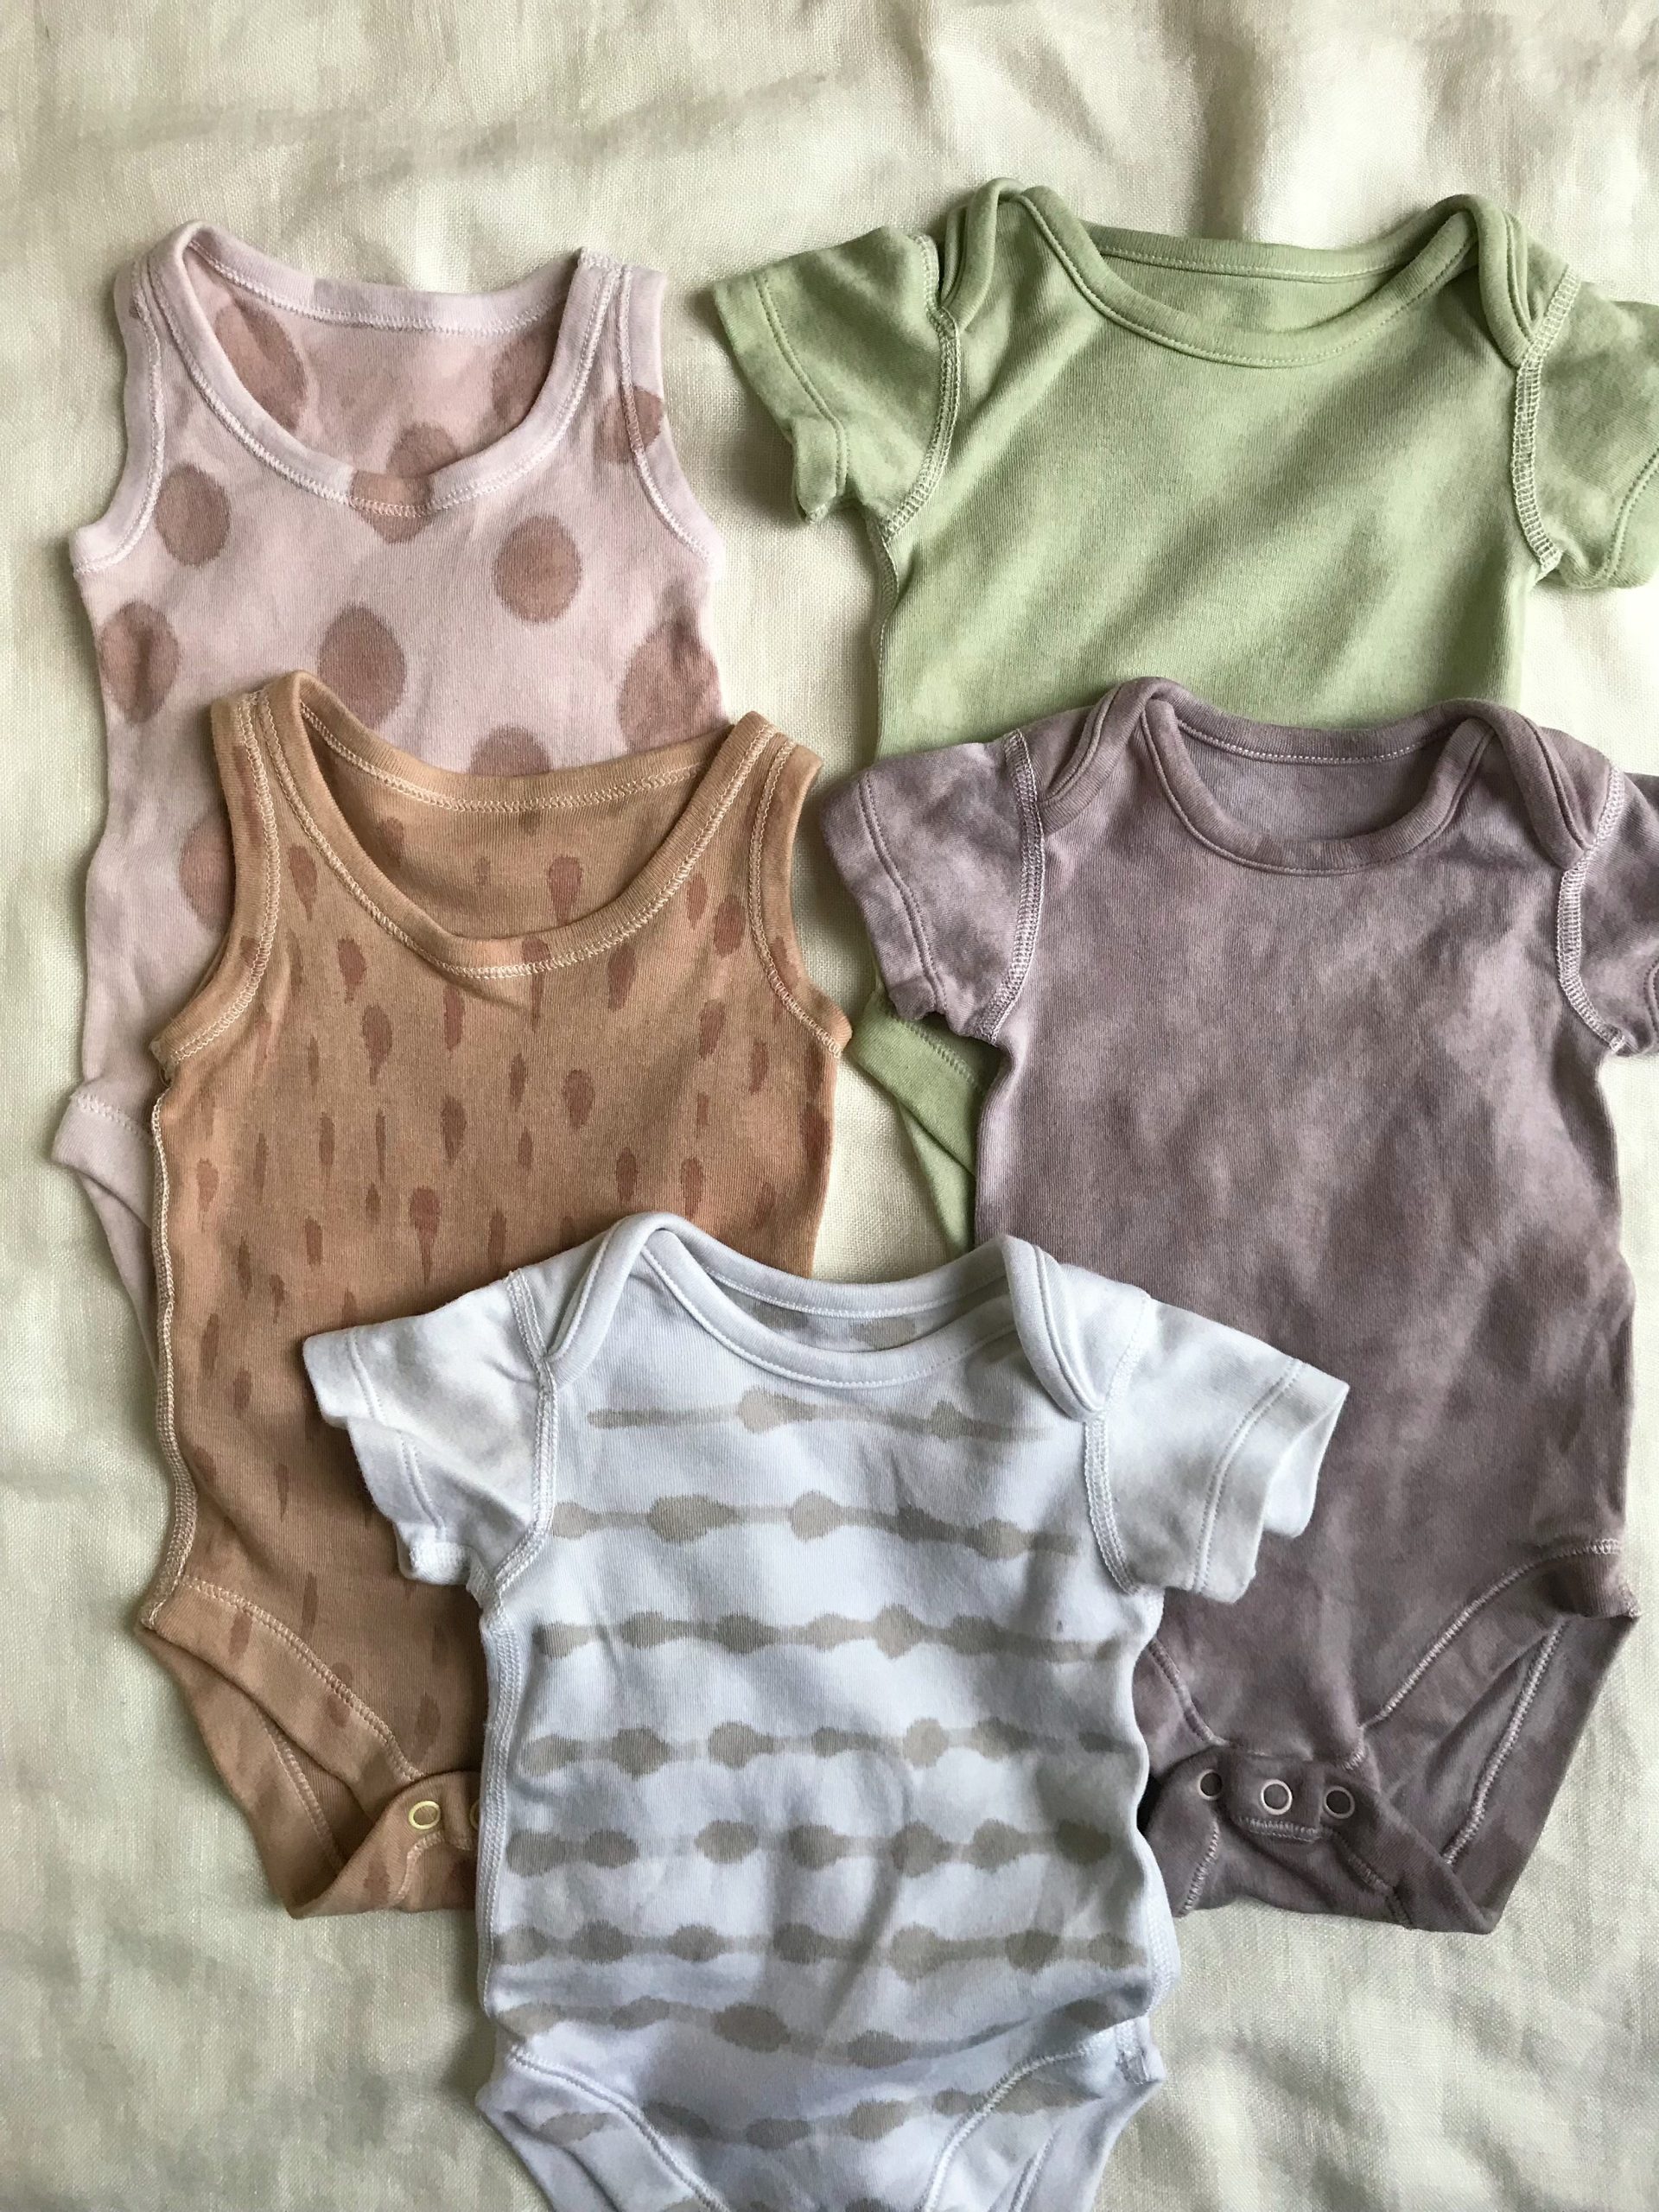 DIY Natural Dye for Clothing - Mama Smiles - Joyful Parenting